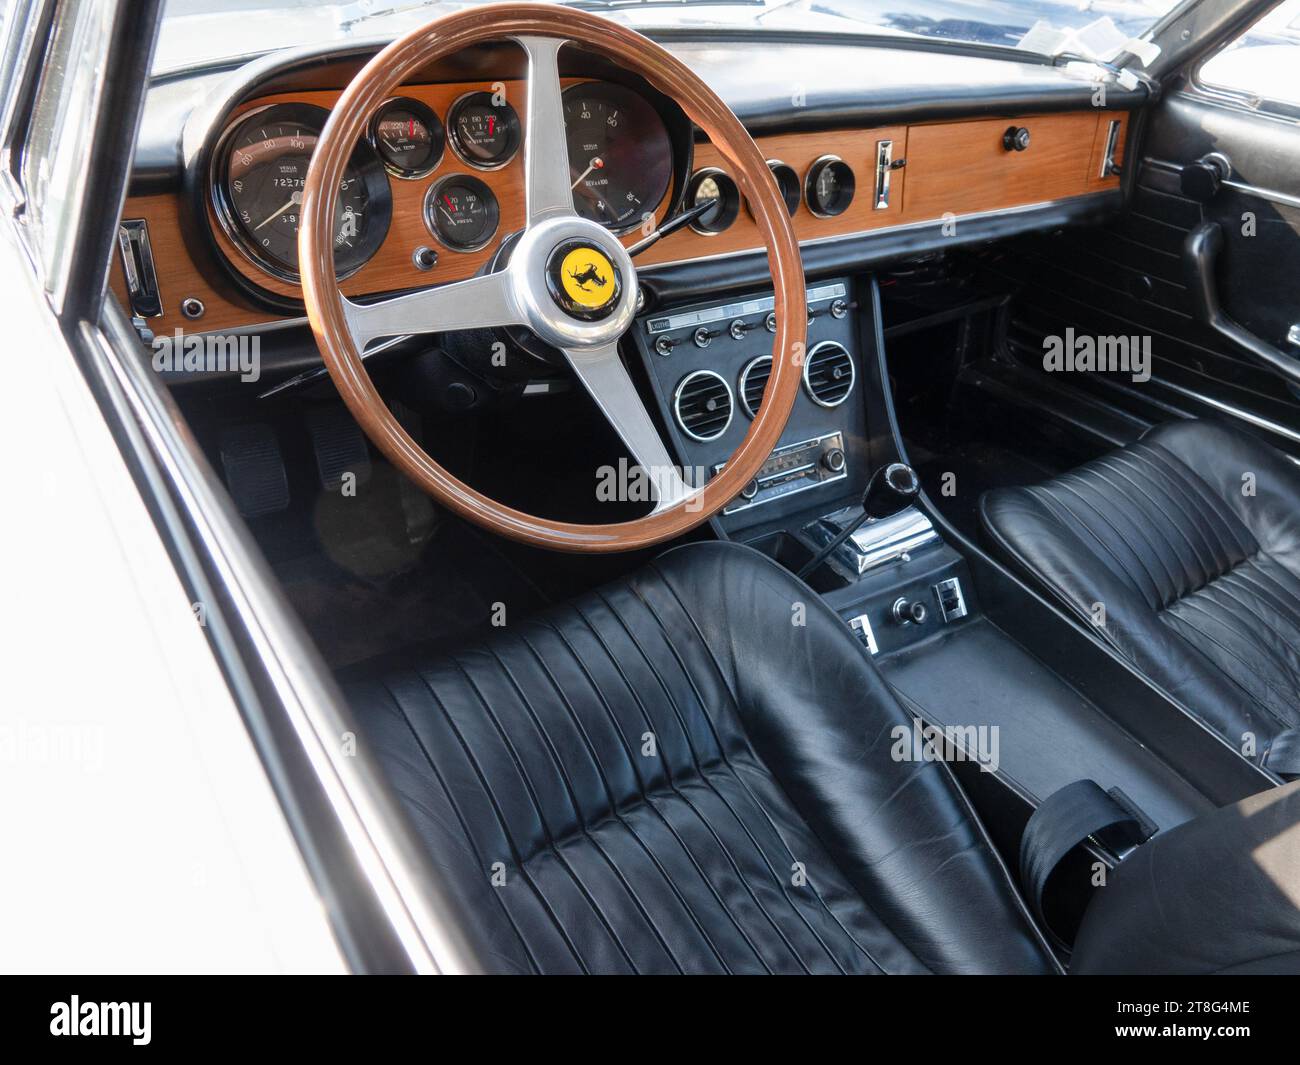 1960s Ferrari 330 GT cabin interior steering wheel and dashboard. Nice, France - June 8, 2023. Stock Photo